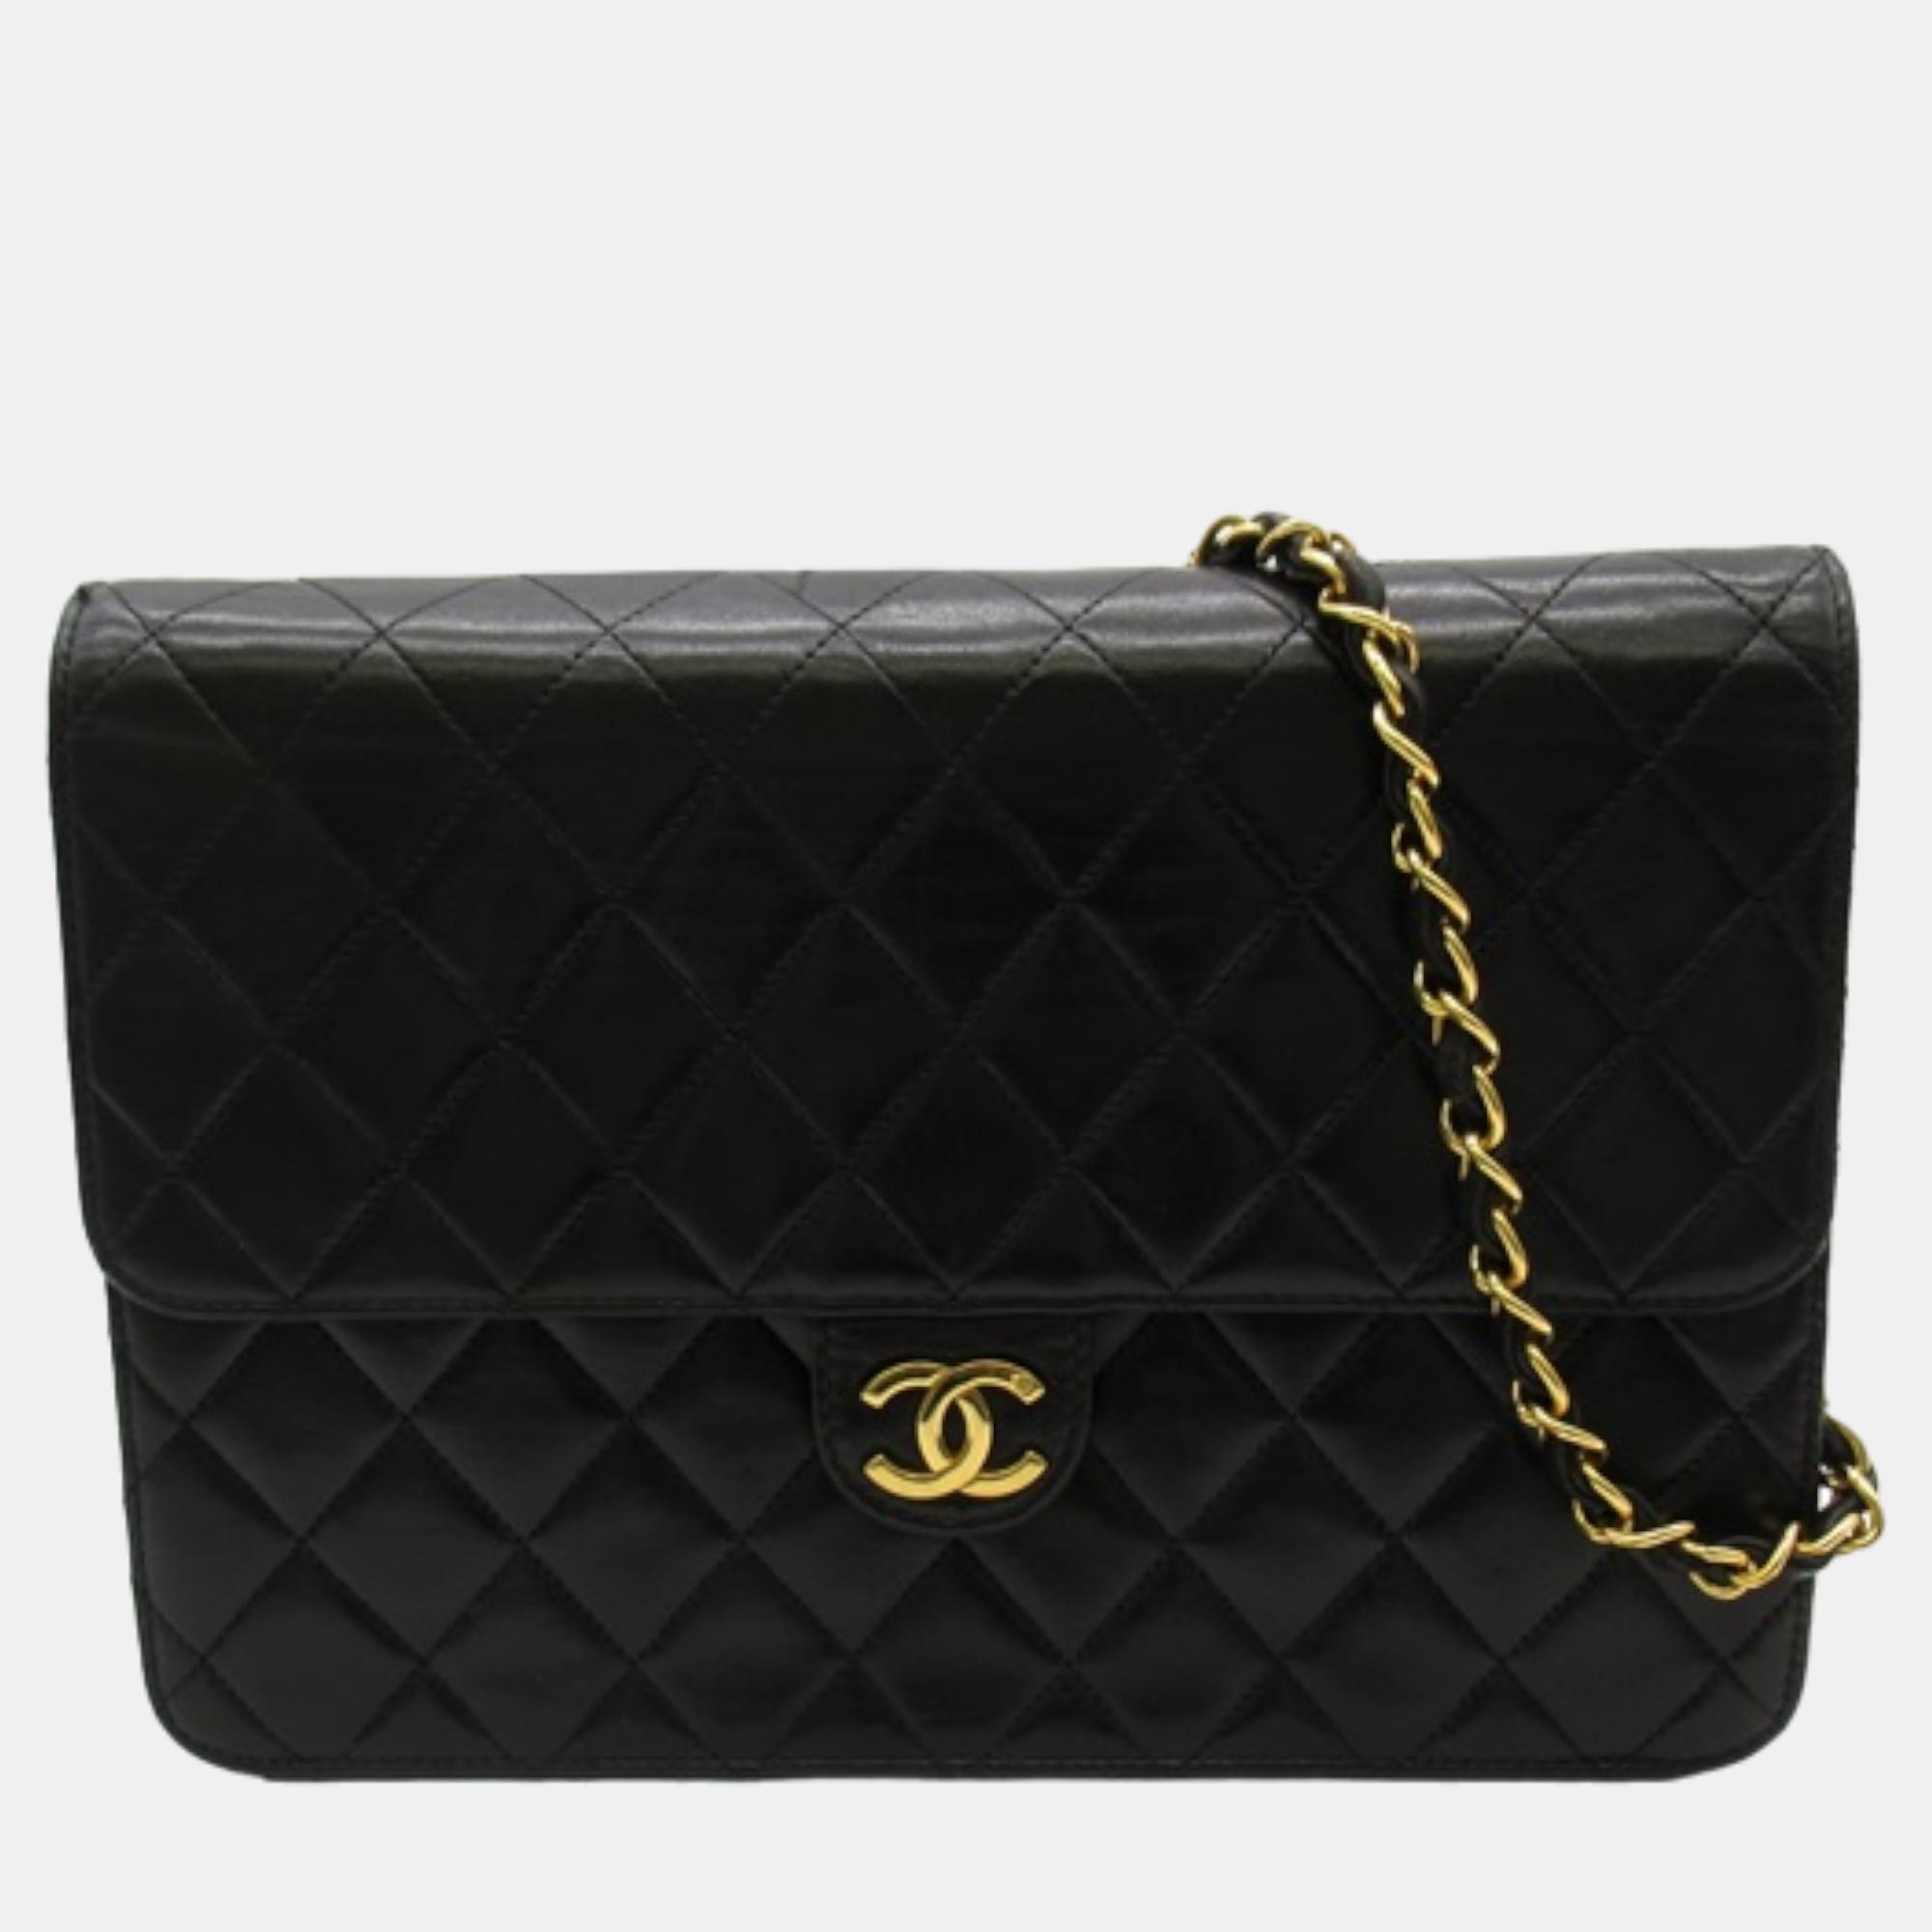 Chanel black leather classic jumbo single flap shoulder bags